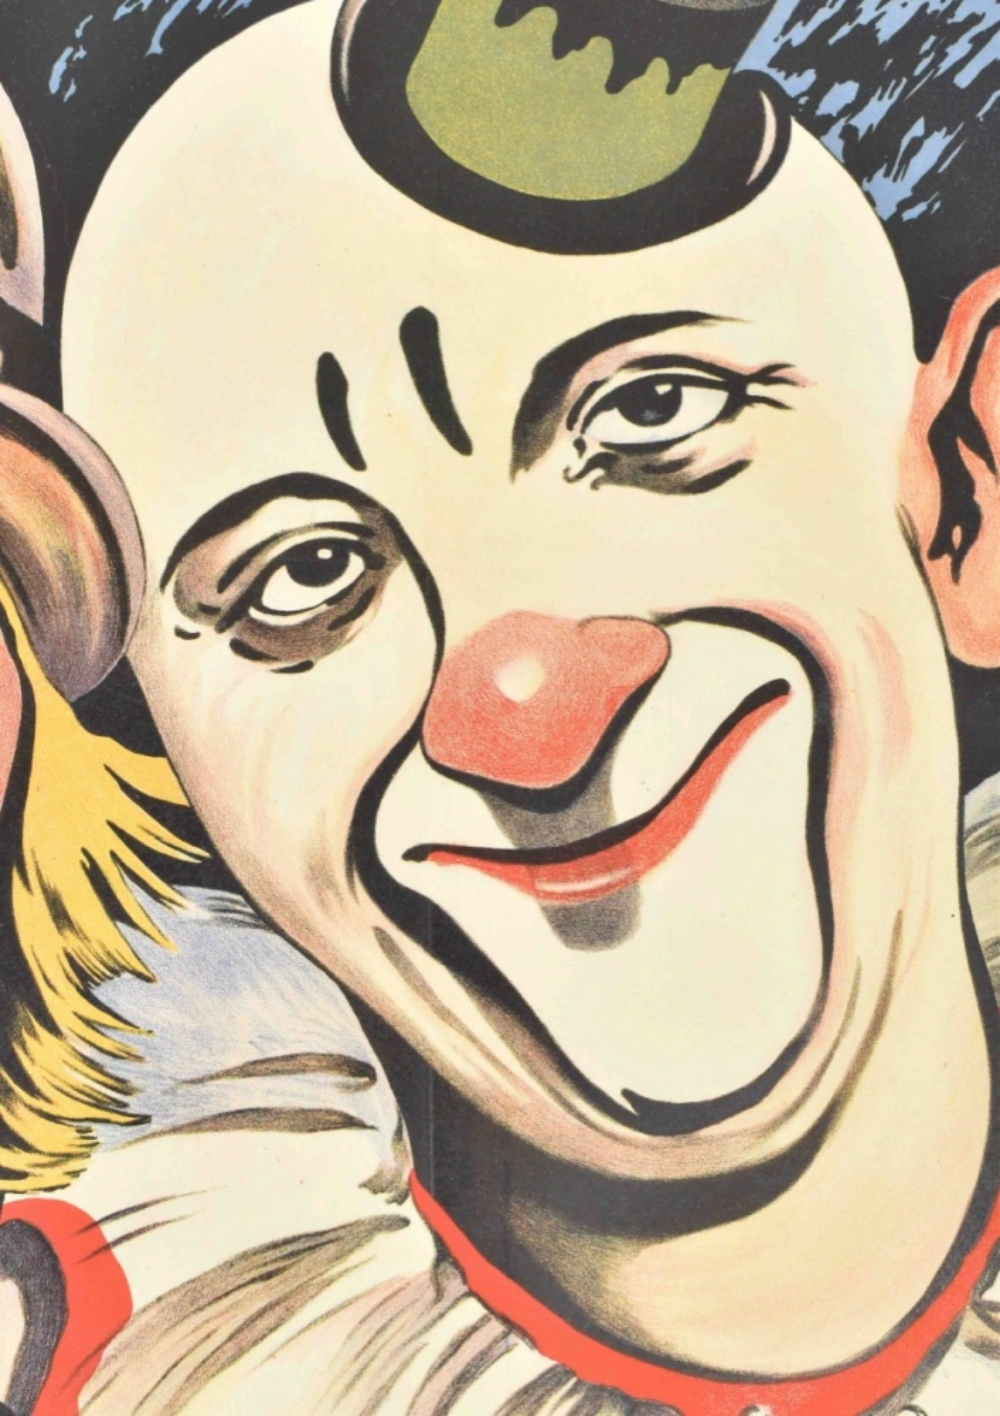 [Strassburger] "Portrait of three clowns" - Image 6 of 7